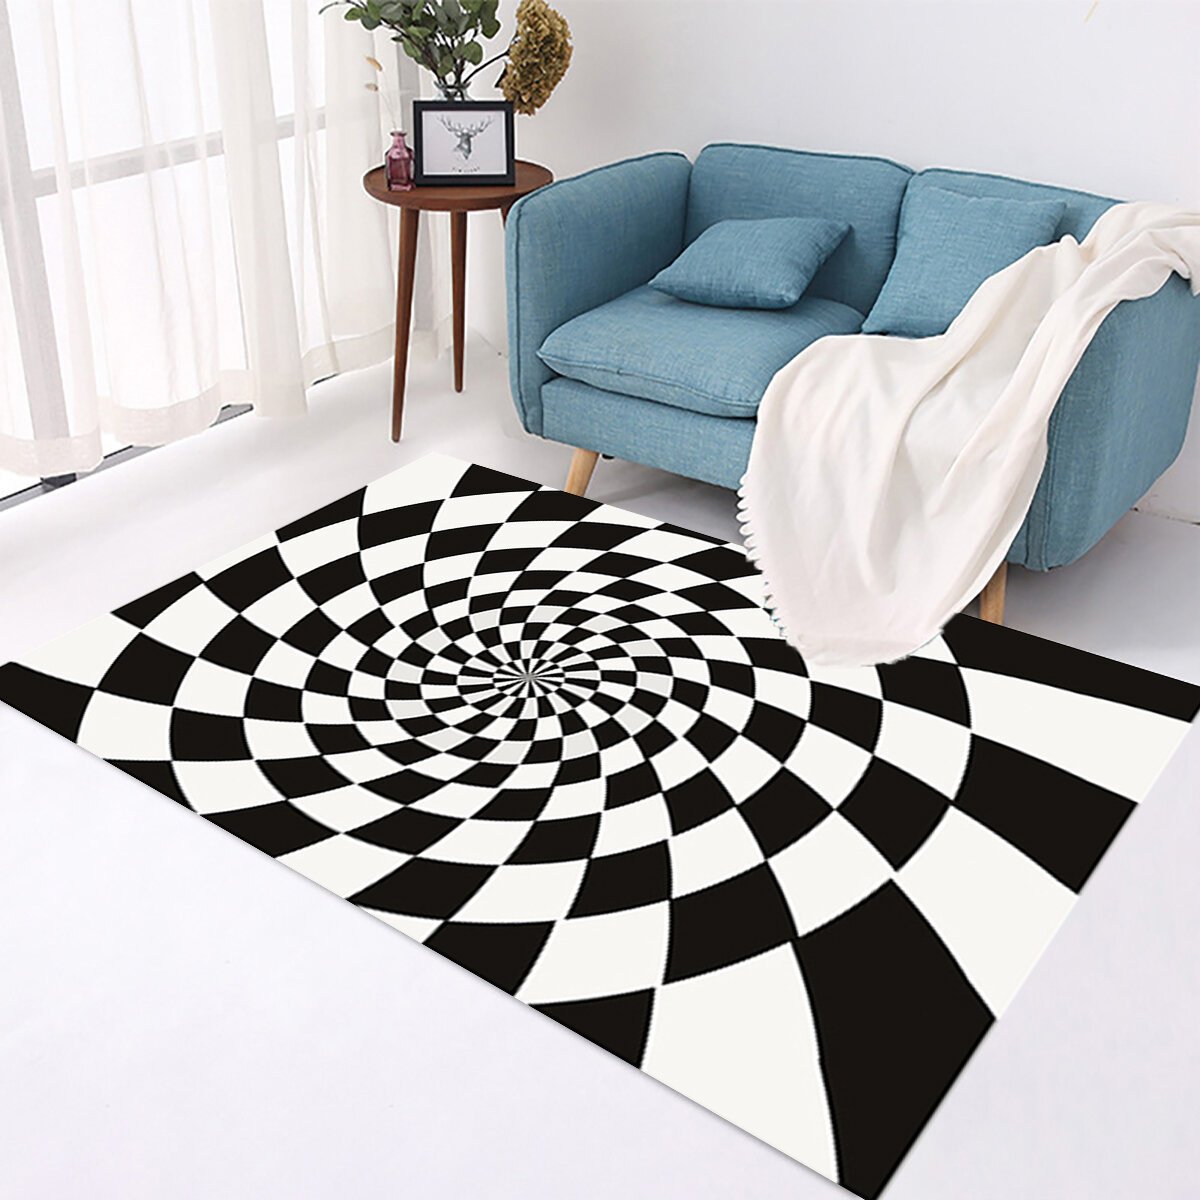 Checkered Optical Illusions Non Slip Area Rug, Durbale Anti-Slip Floor Mat Non-Woven Black White Doormat, for Living Dinning Room Bedroom Kitchen